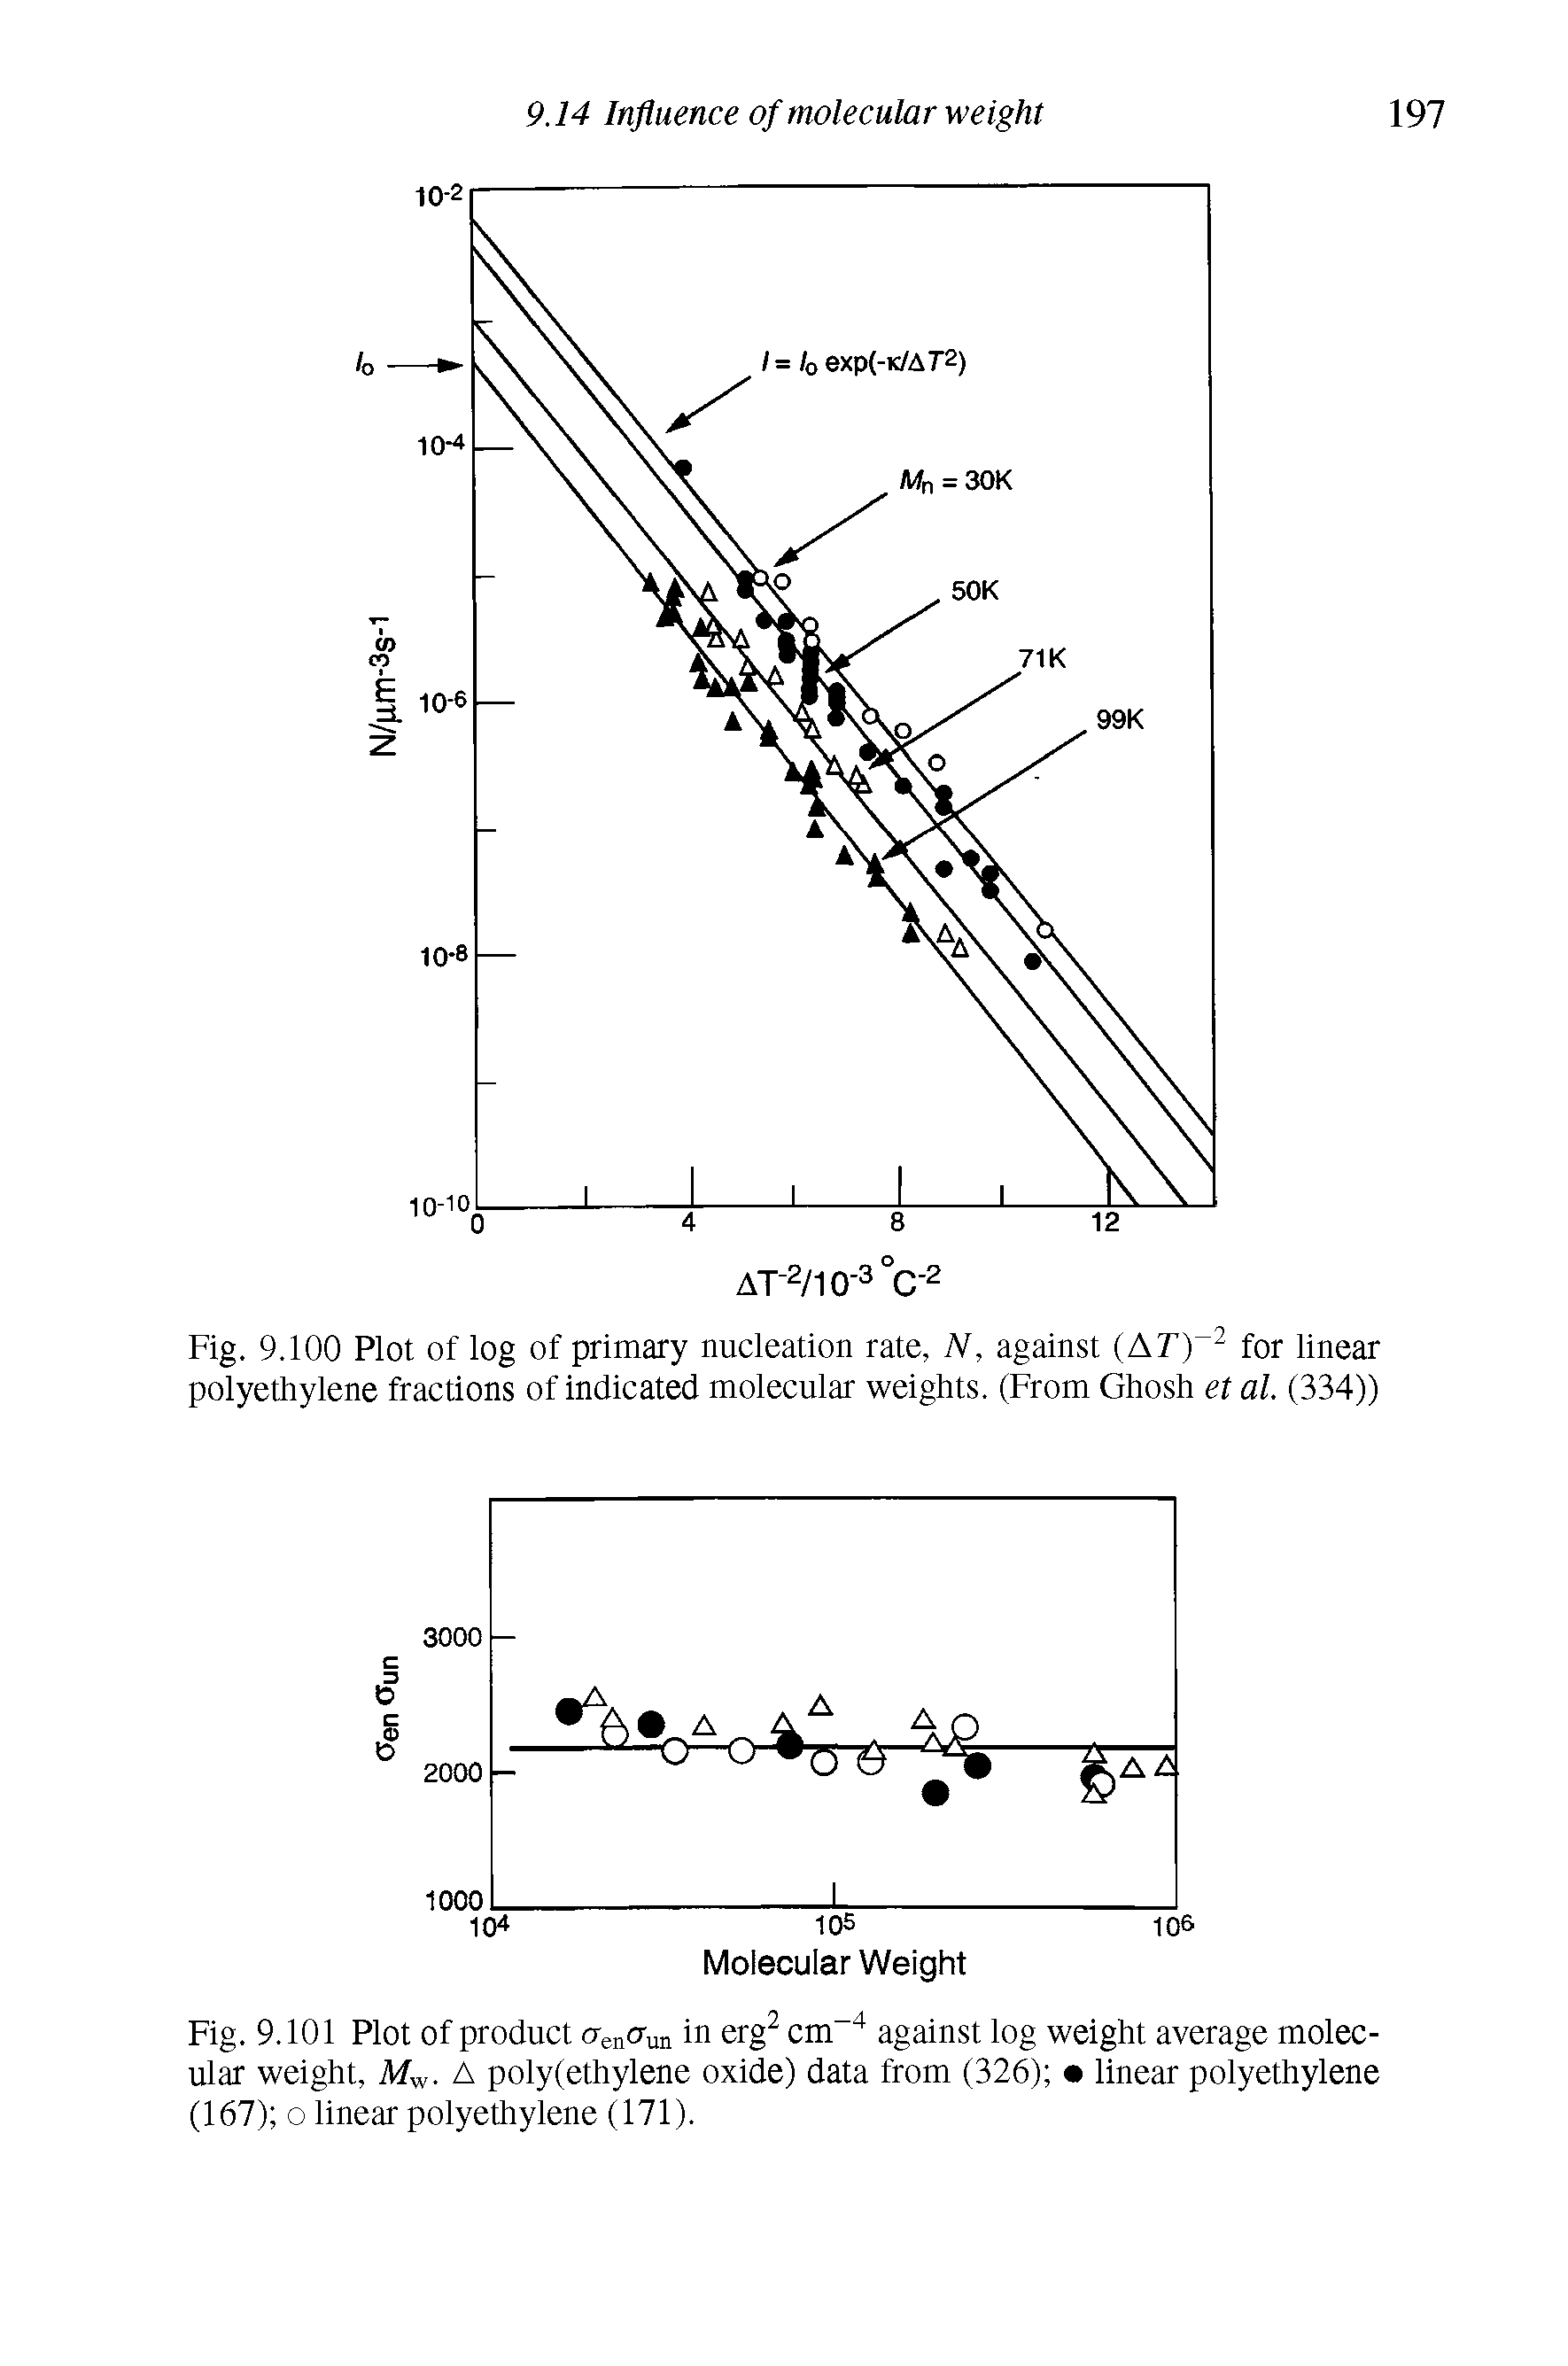 Fig. 9.101 Plot of product cren<run in erg cm against log weight average molecular weight, Mw A poly(ethylene oxide) data from (326) linear polyethylene (167) o linear polyethylene (171).